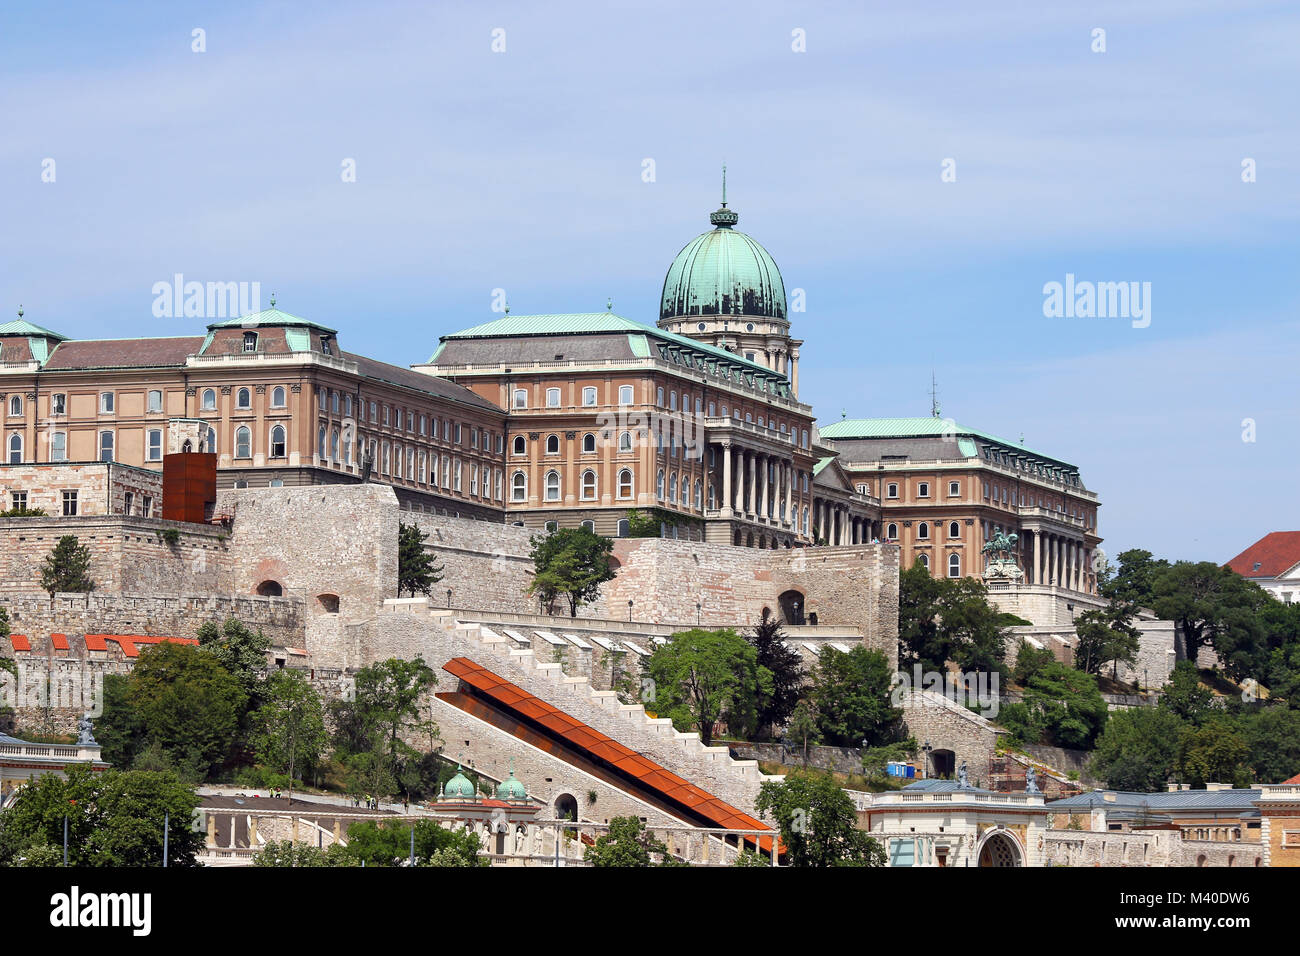 Royal castle on hill Budapest Hungary Stock Photo